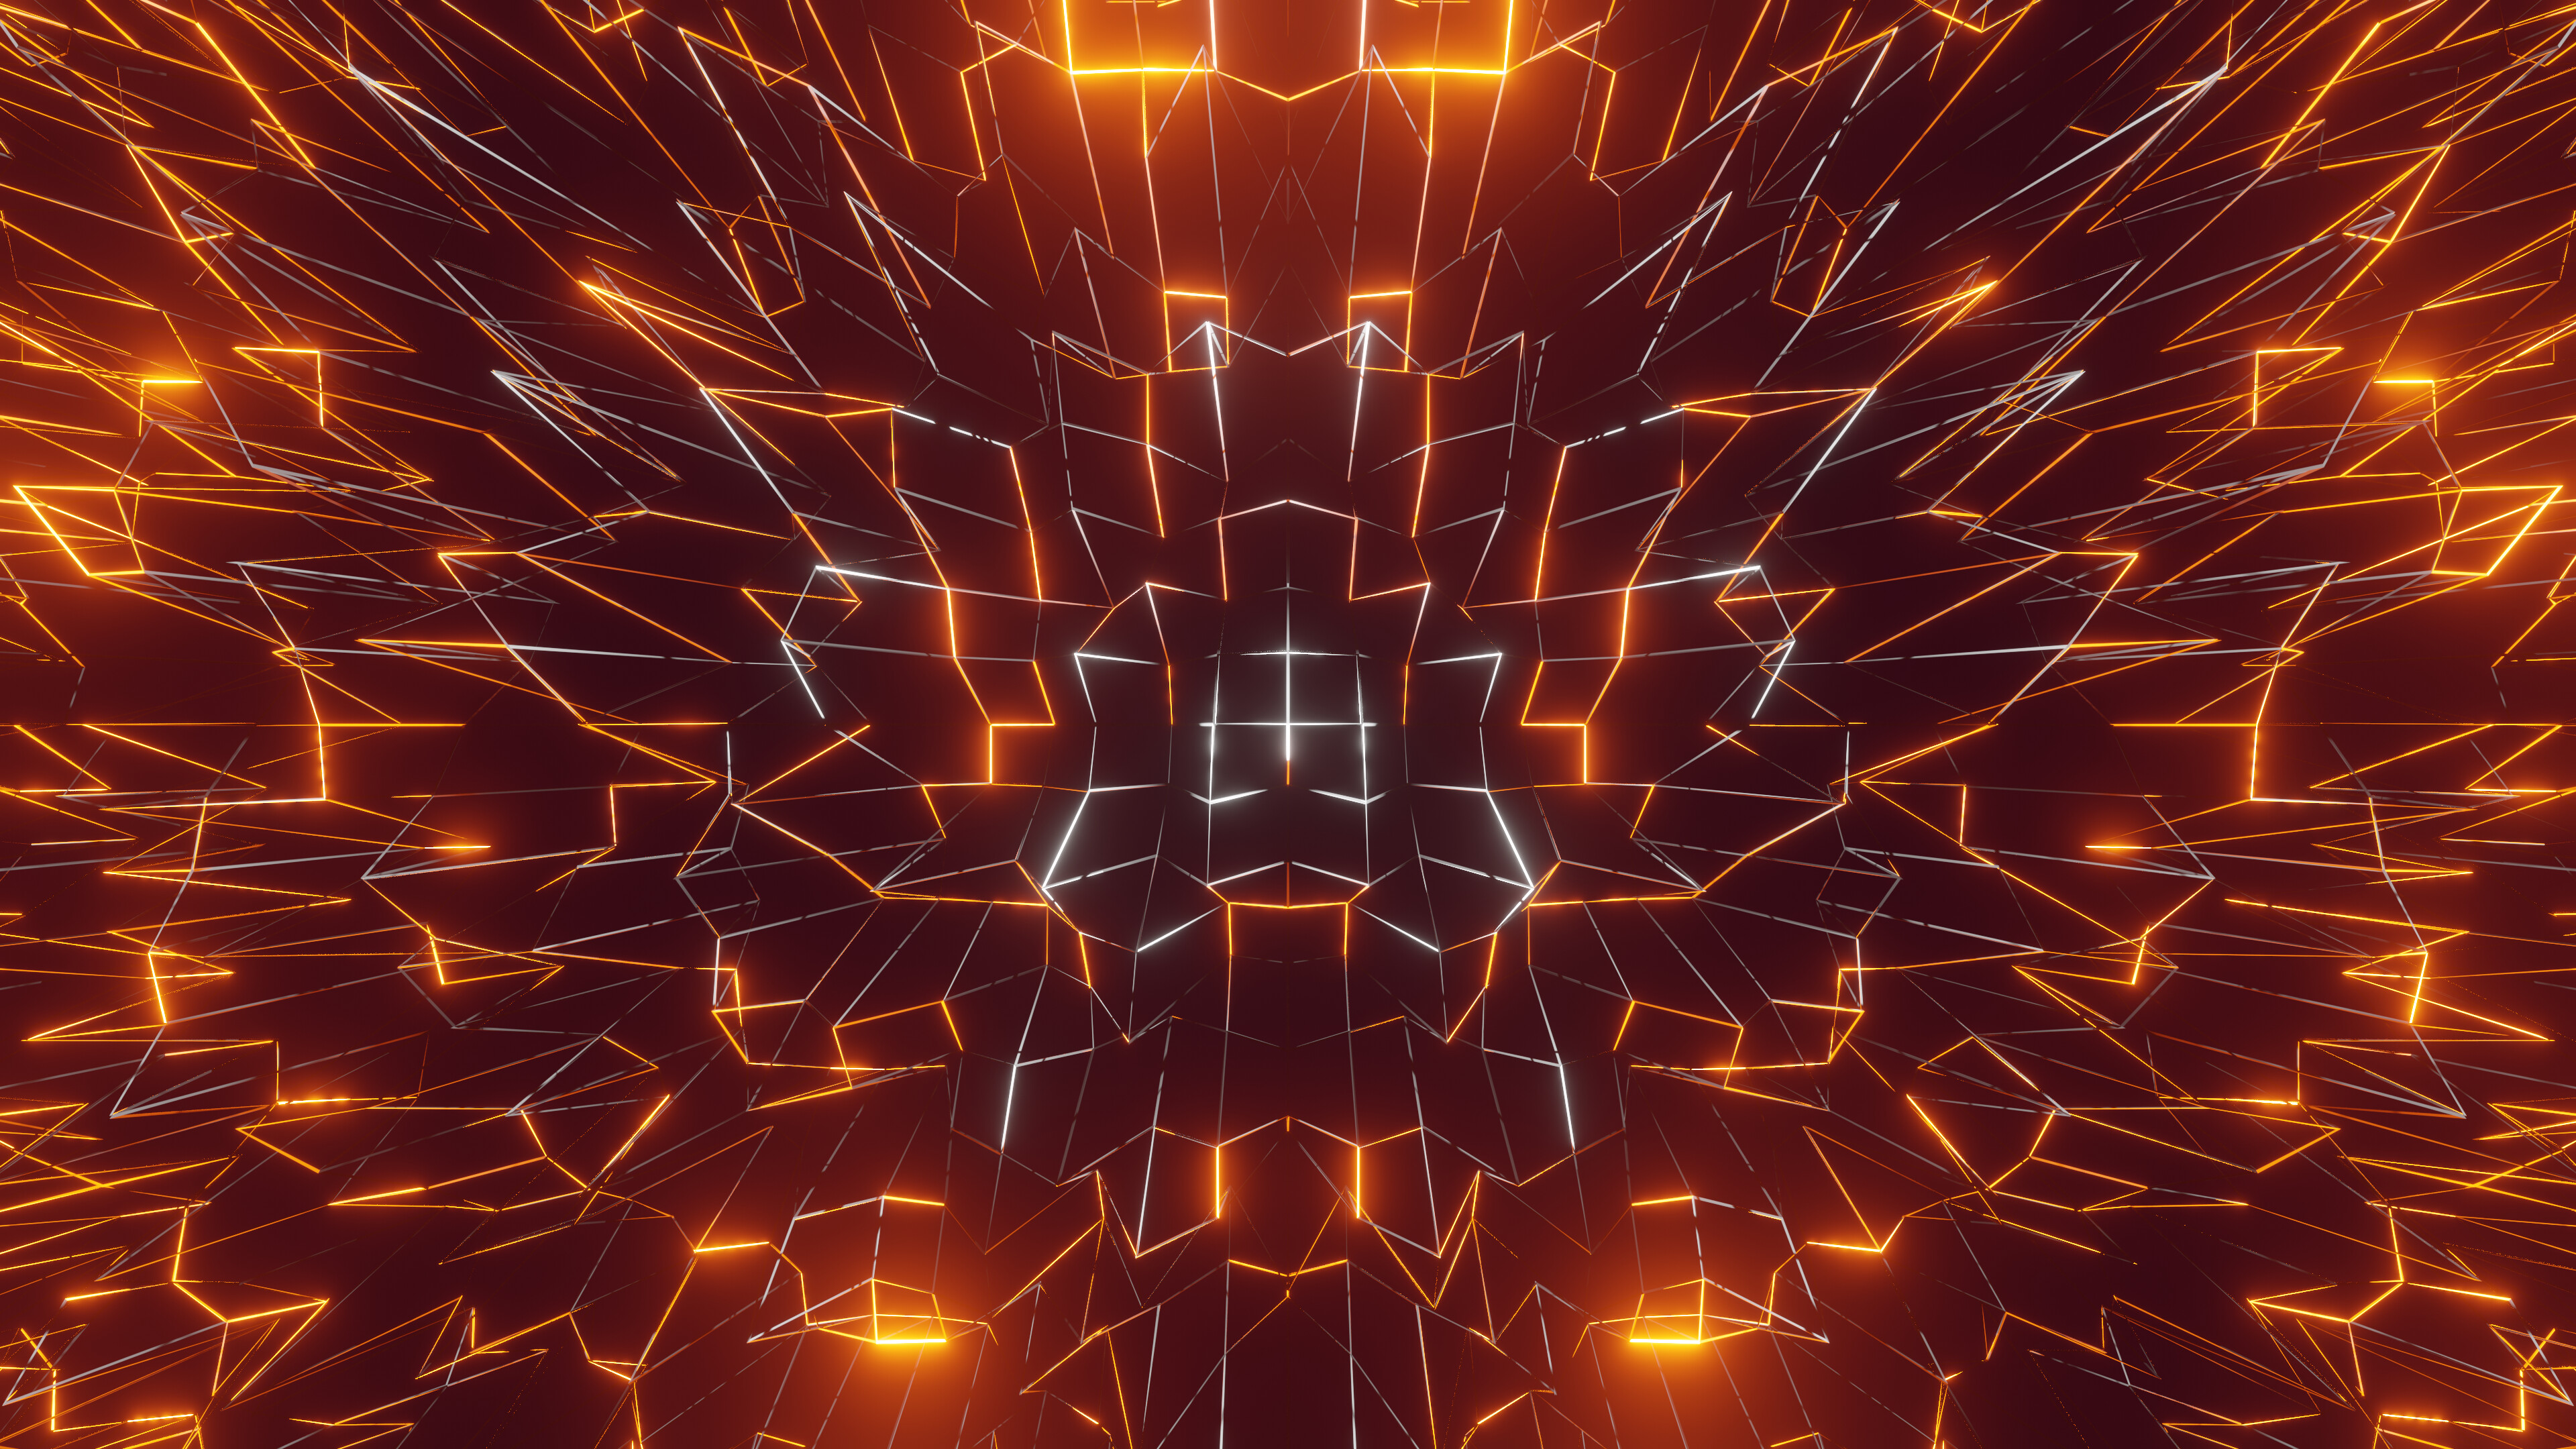 Glow in the Dark: Cosmic light, Flashing lines, Abstract symmetry. 3840x2160 4K Wallpaper.